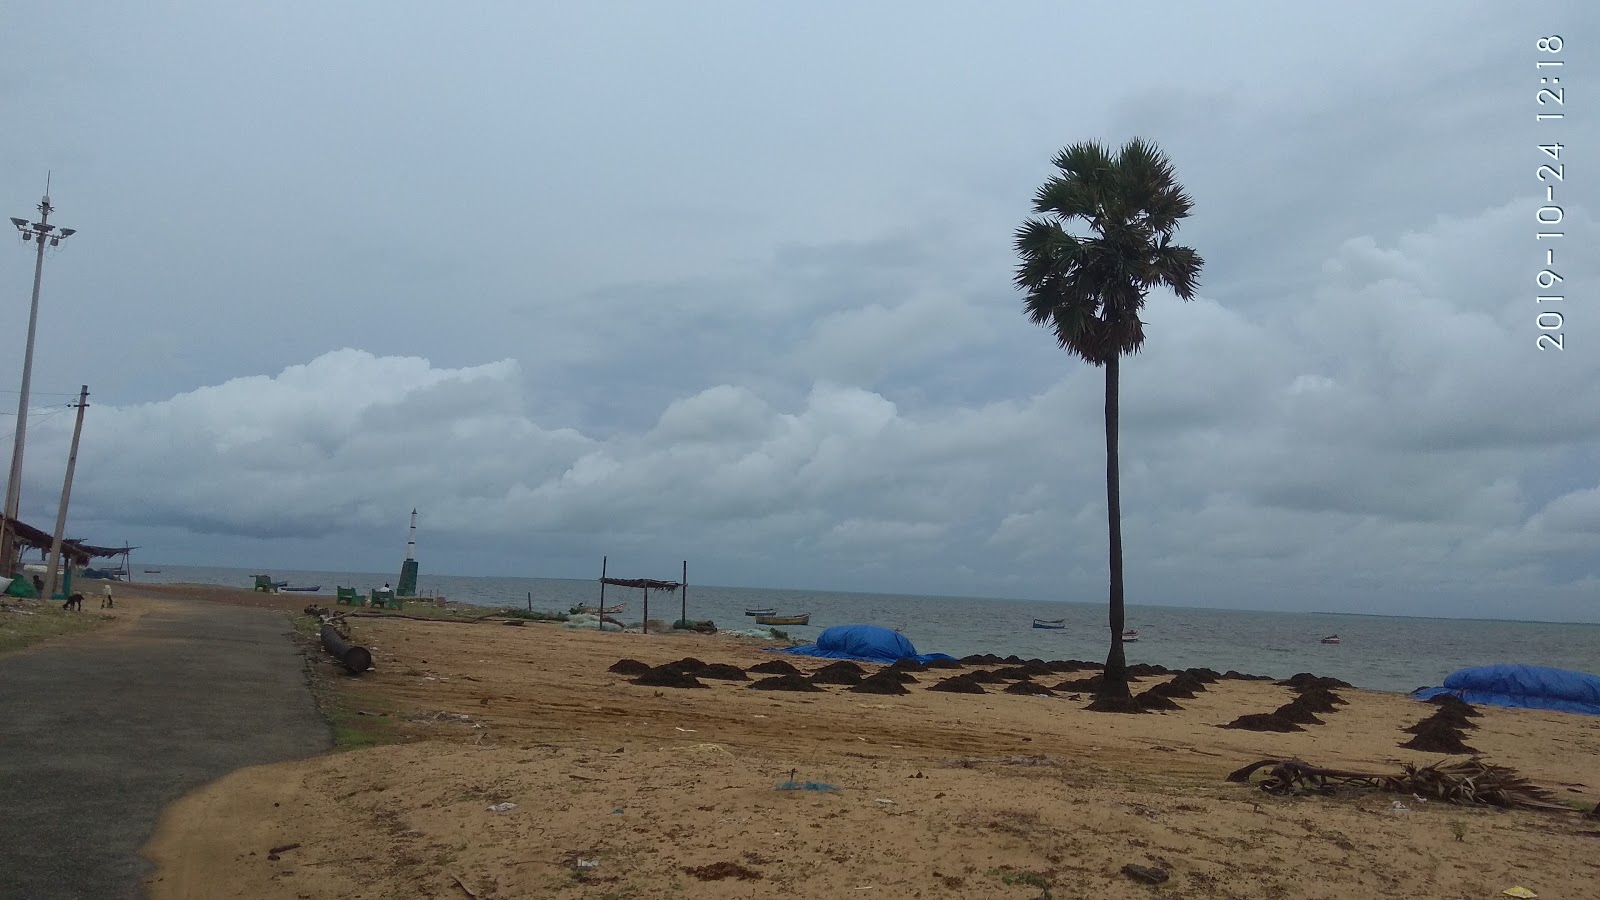 Foto af Seeni Appa Dargha Beach - populært sted blandt afslapningskendere